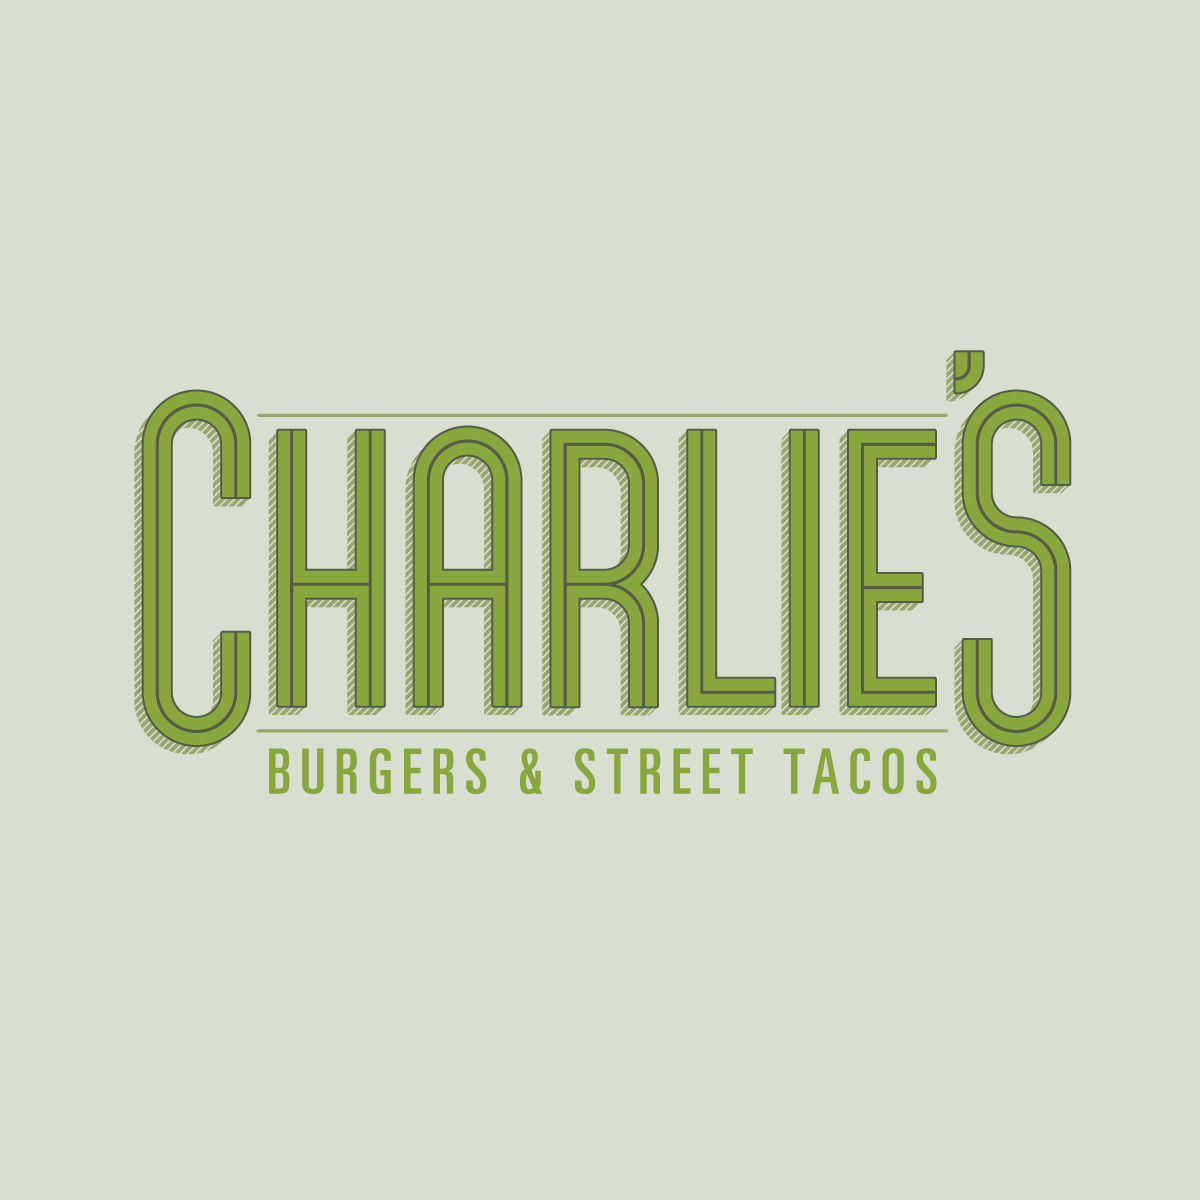 Charlie's Burgers & Street Tacos 213 E Rusk St